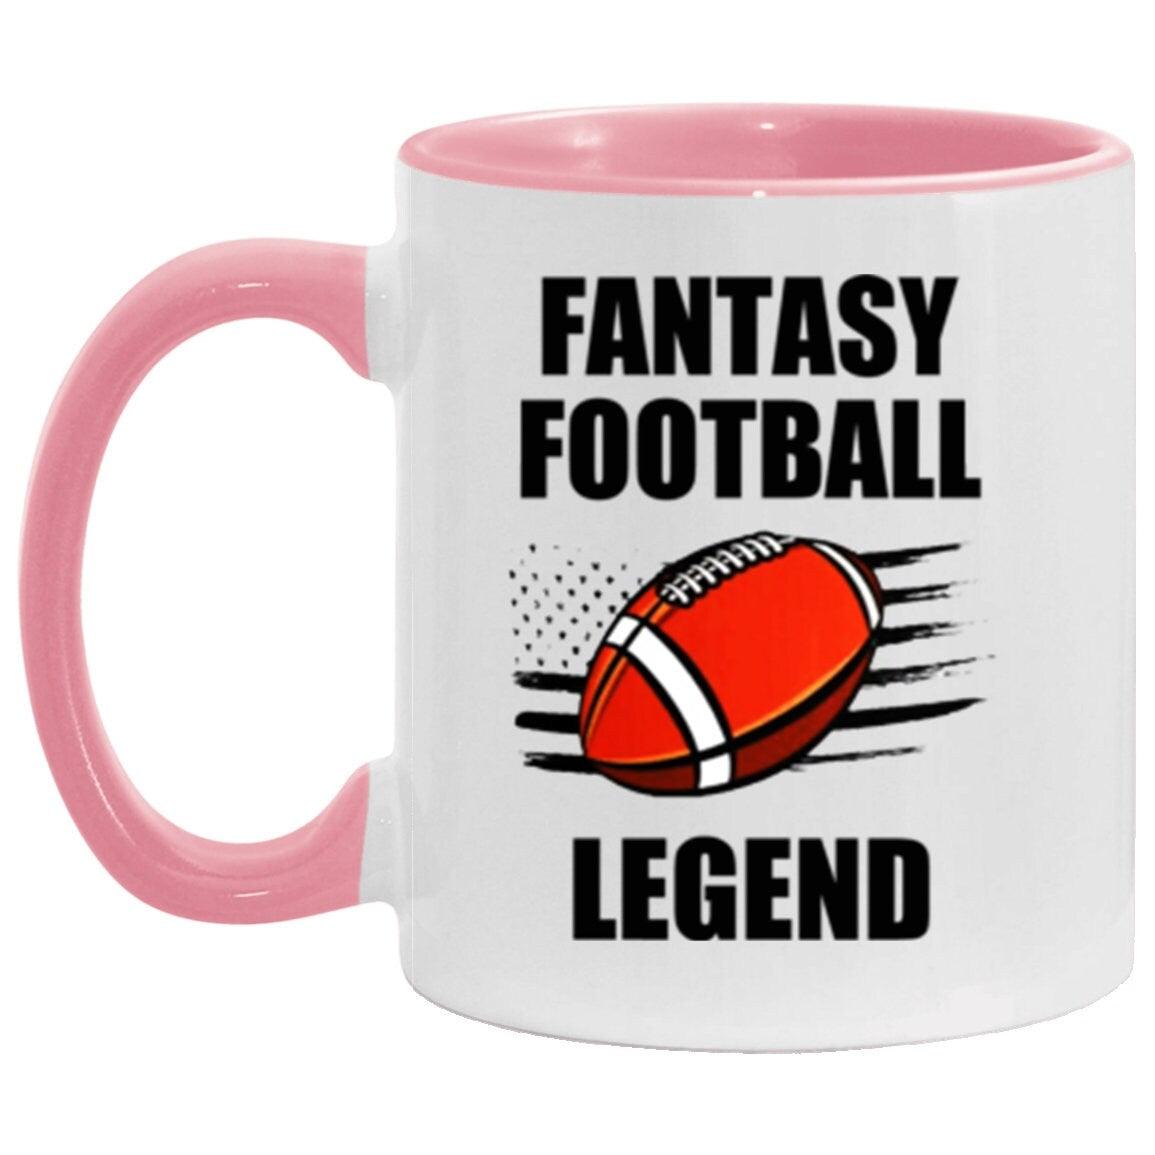 Fantasy Football Legend Accent šalica, smiješna FFL nogometna šalica, fantasy sportska šalica na dar 11 oz. Accent šalica, keramička šalica za fantasy nogomet - plusminusco.com